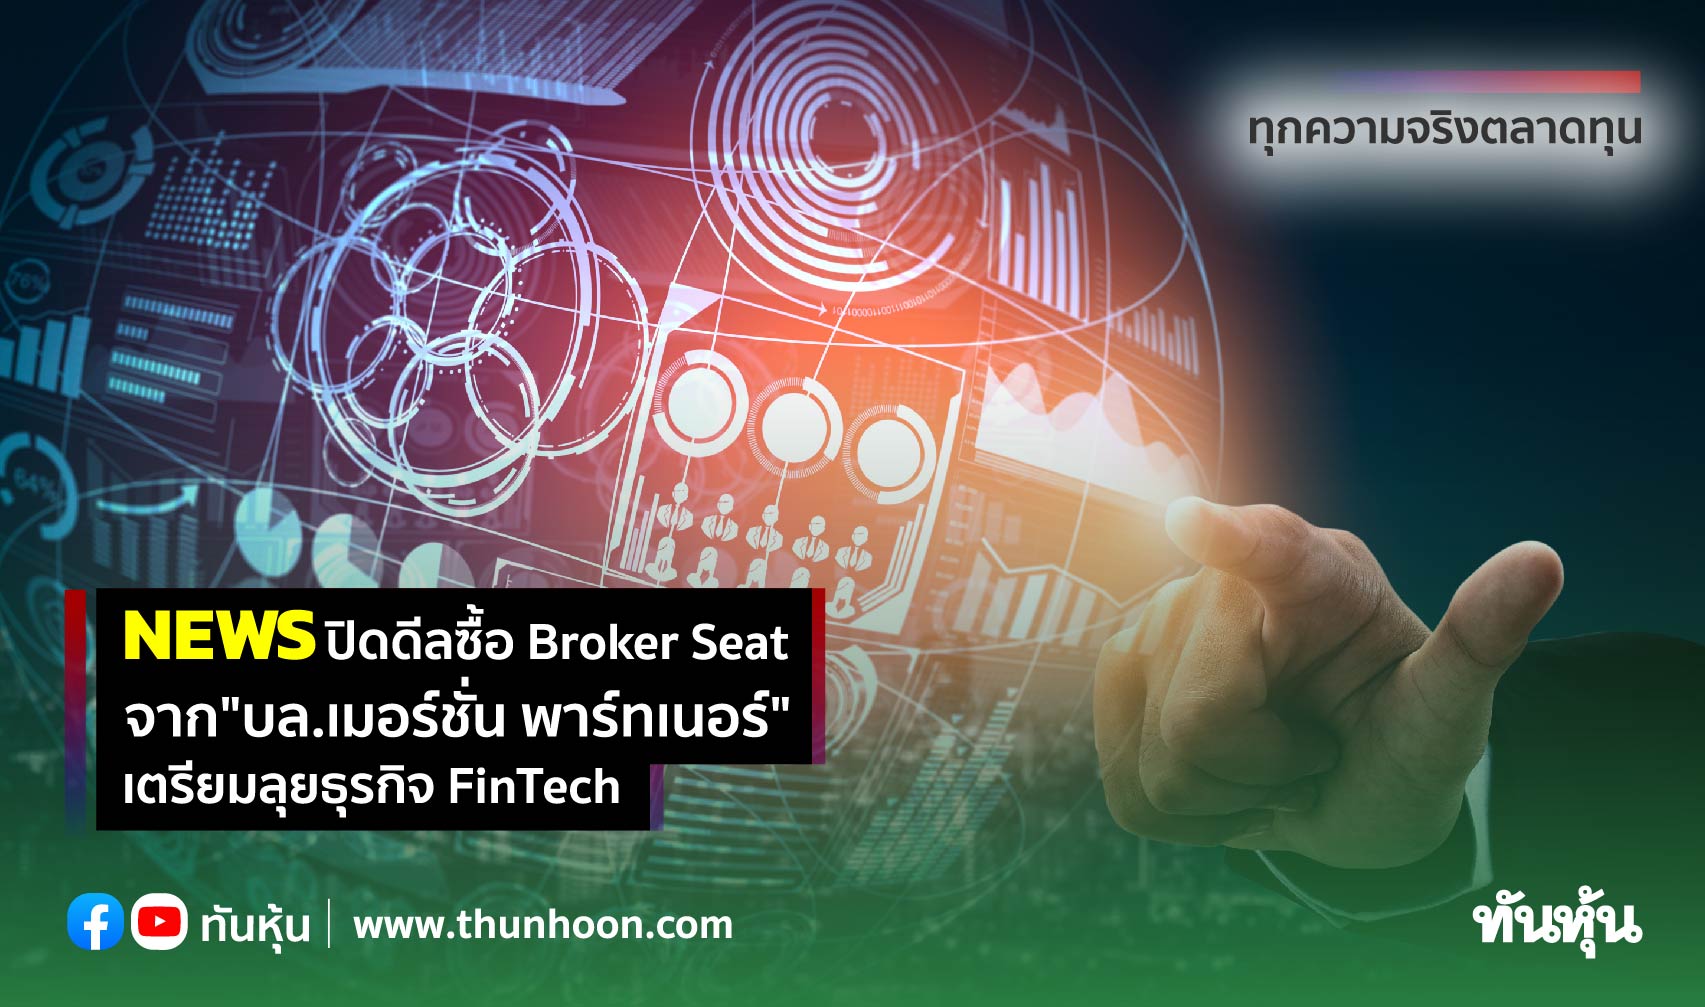 NEWS ปิดดีลซื้อ Broker Seat จาก"บล.เมอร์ชั่น พาร์ทเนอร์" เตรียมลุยธุรกิจ FinTech